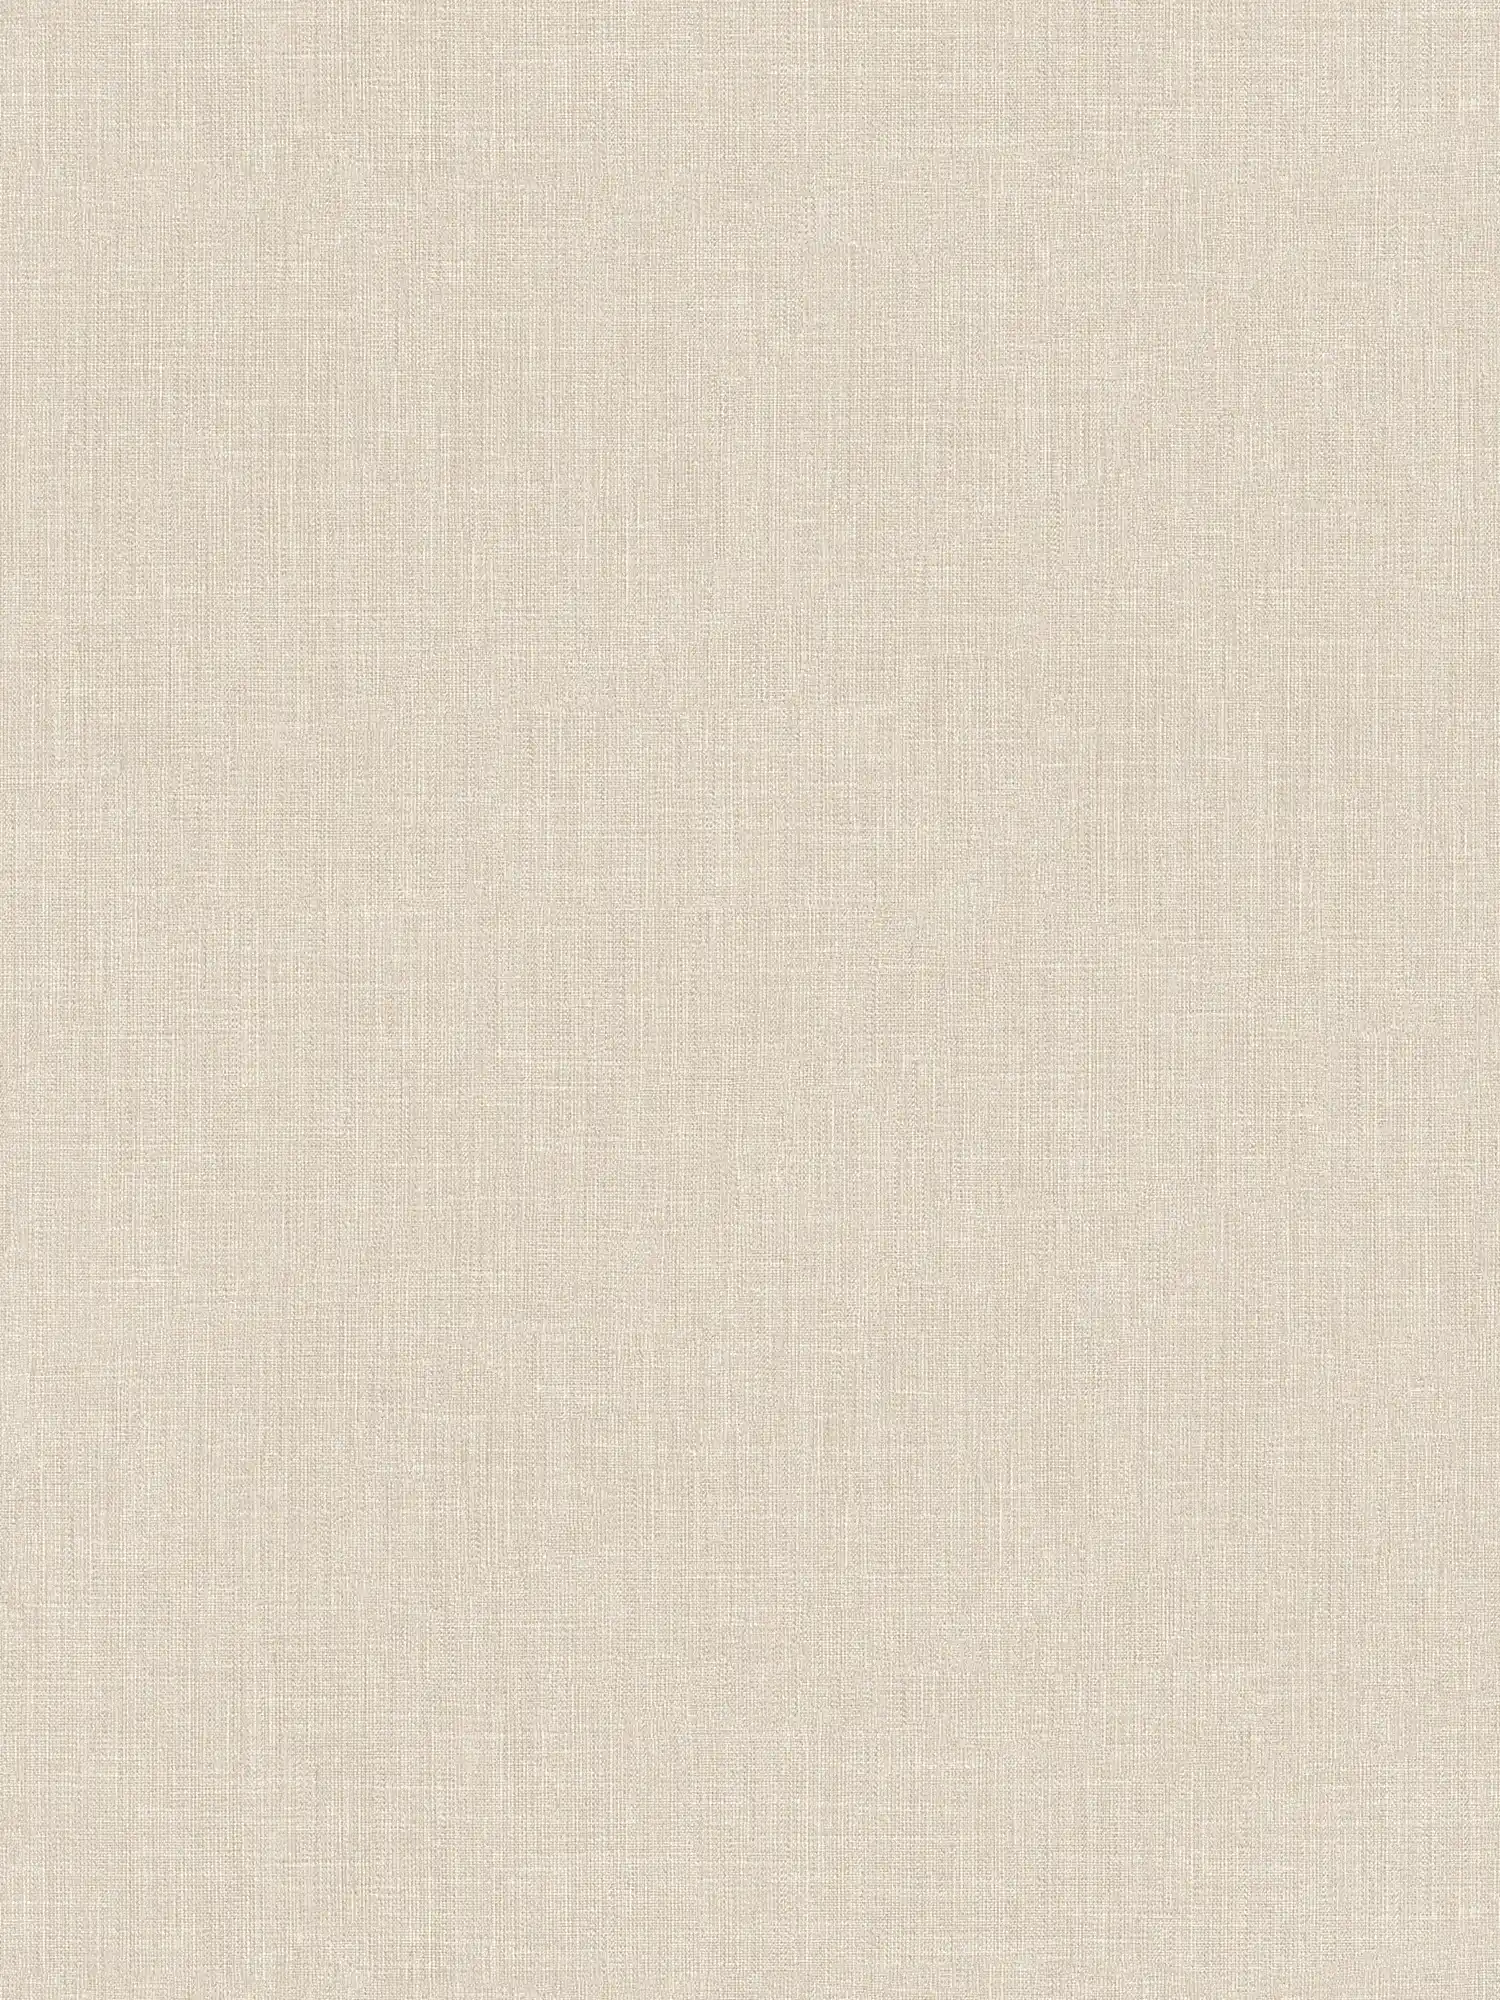 Non-woven wallpaper beige mottled linen look & textile texture
